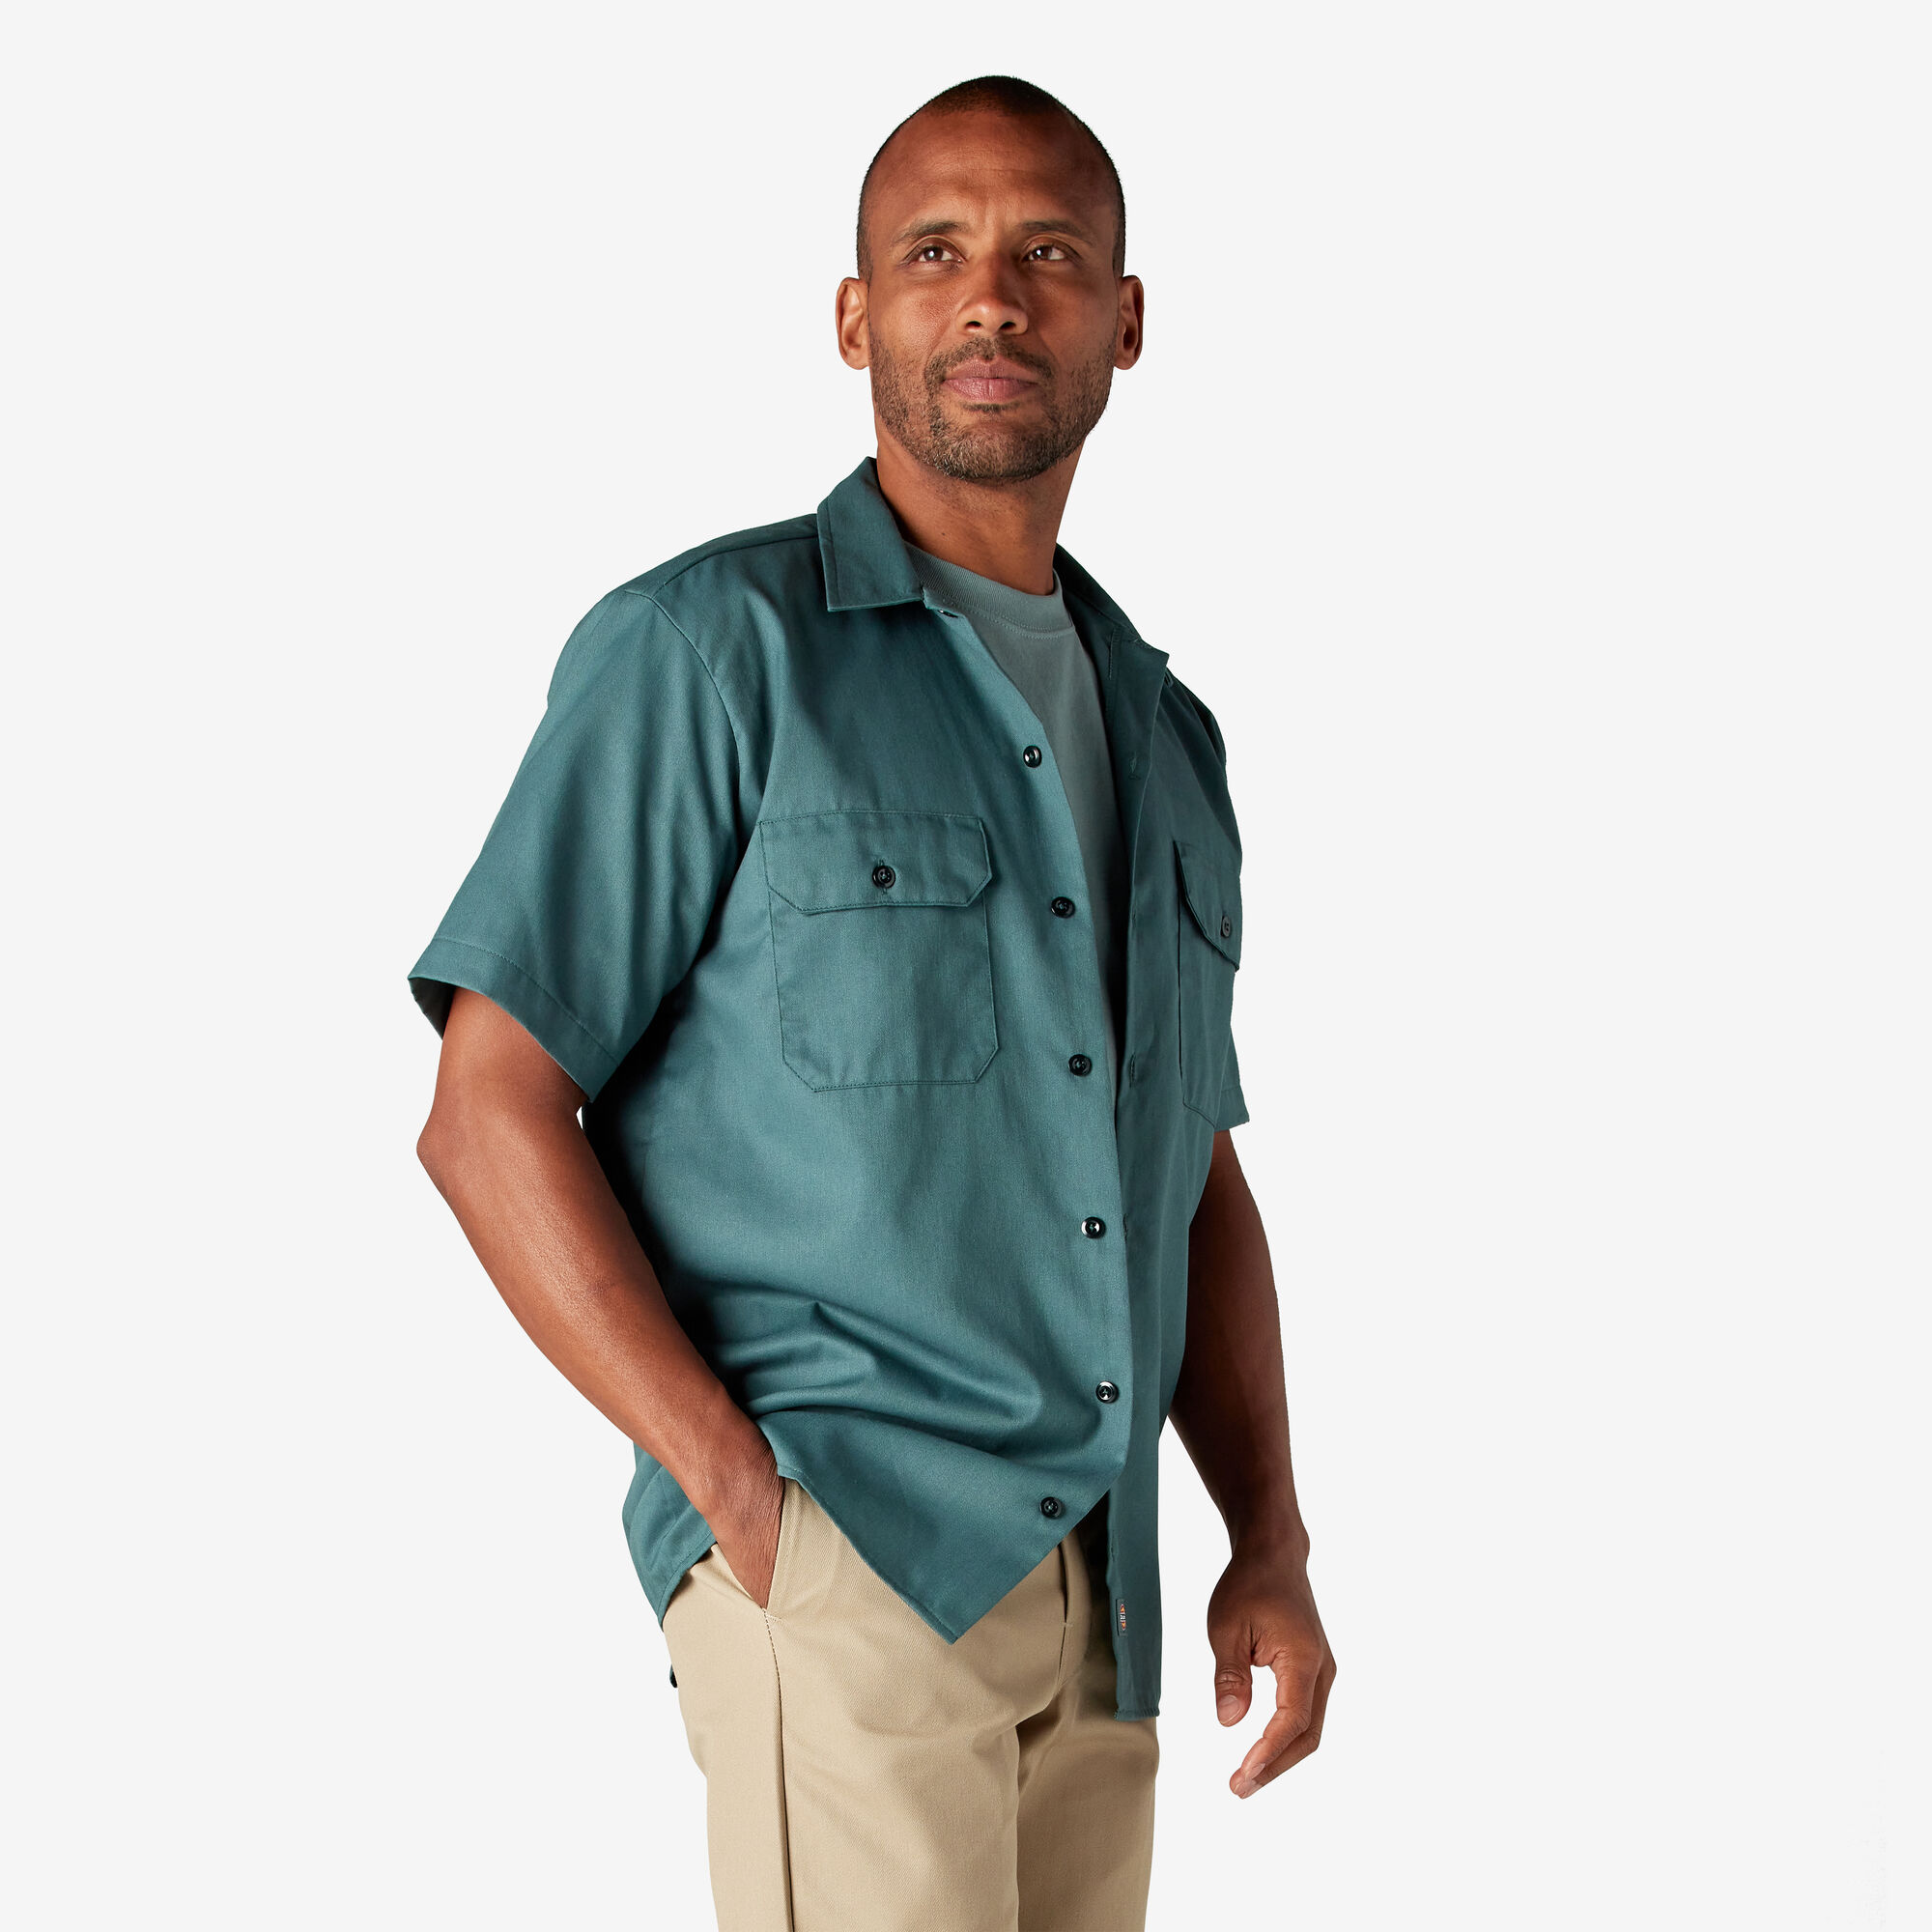 Dickies 1574 Short Sleeve Work Shirt - Lincoln Green, S